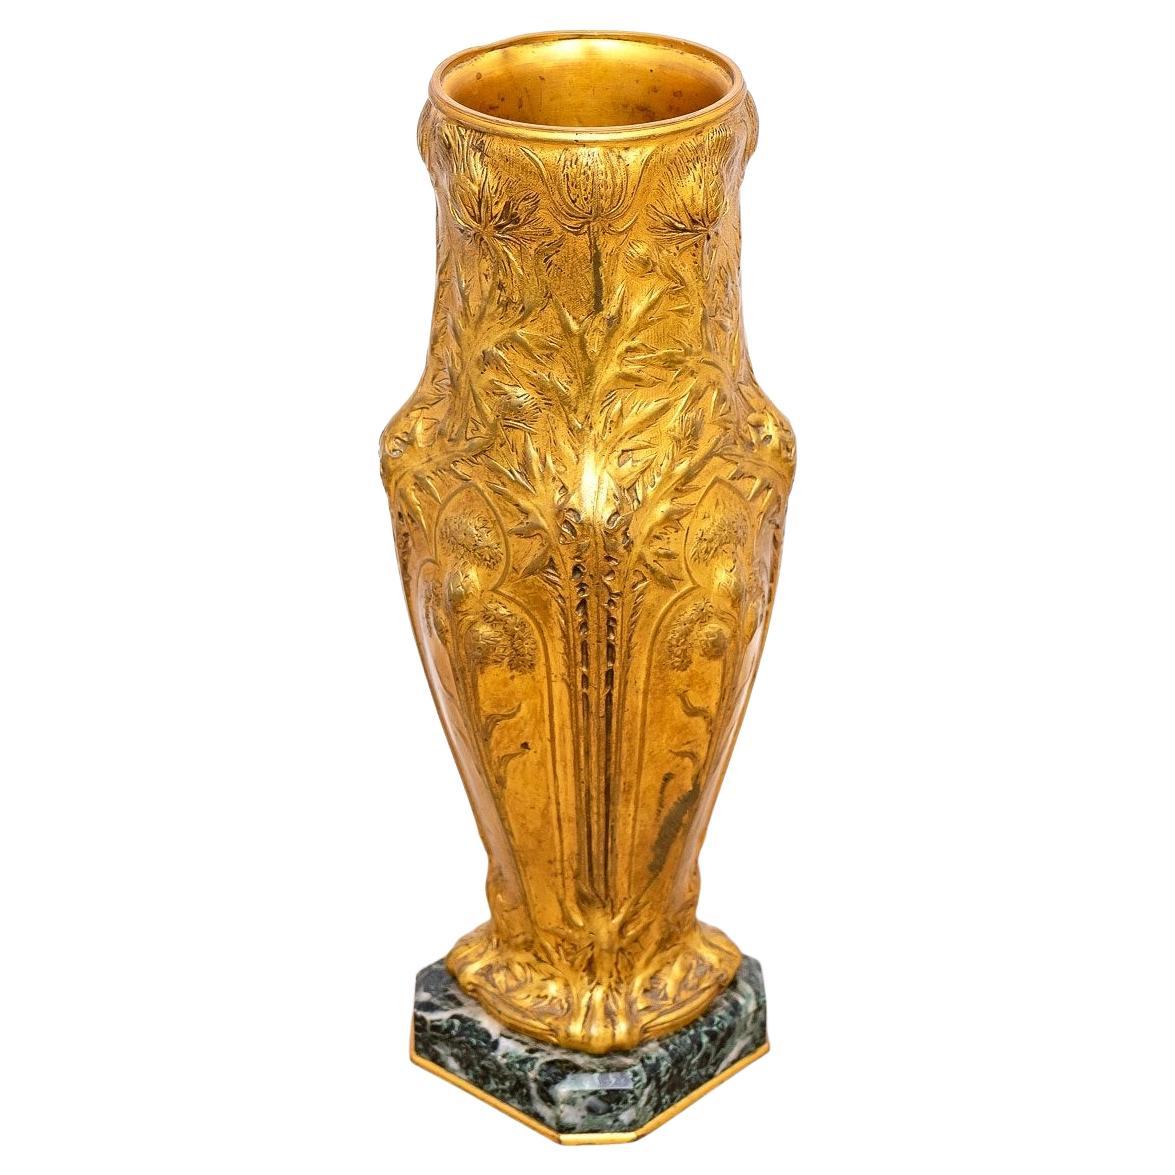 Bronze Baluster Vase - Barbedienne Cast Iron - Thistles Of Lorraine Decor - Peri For Sale